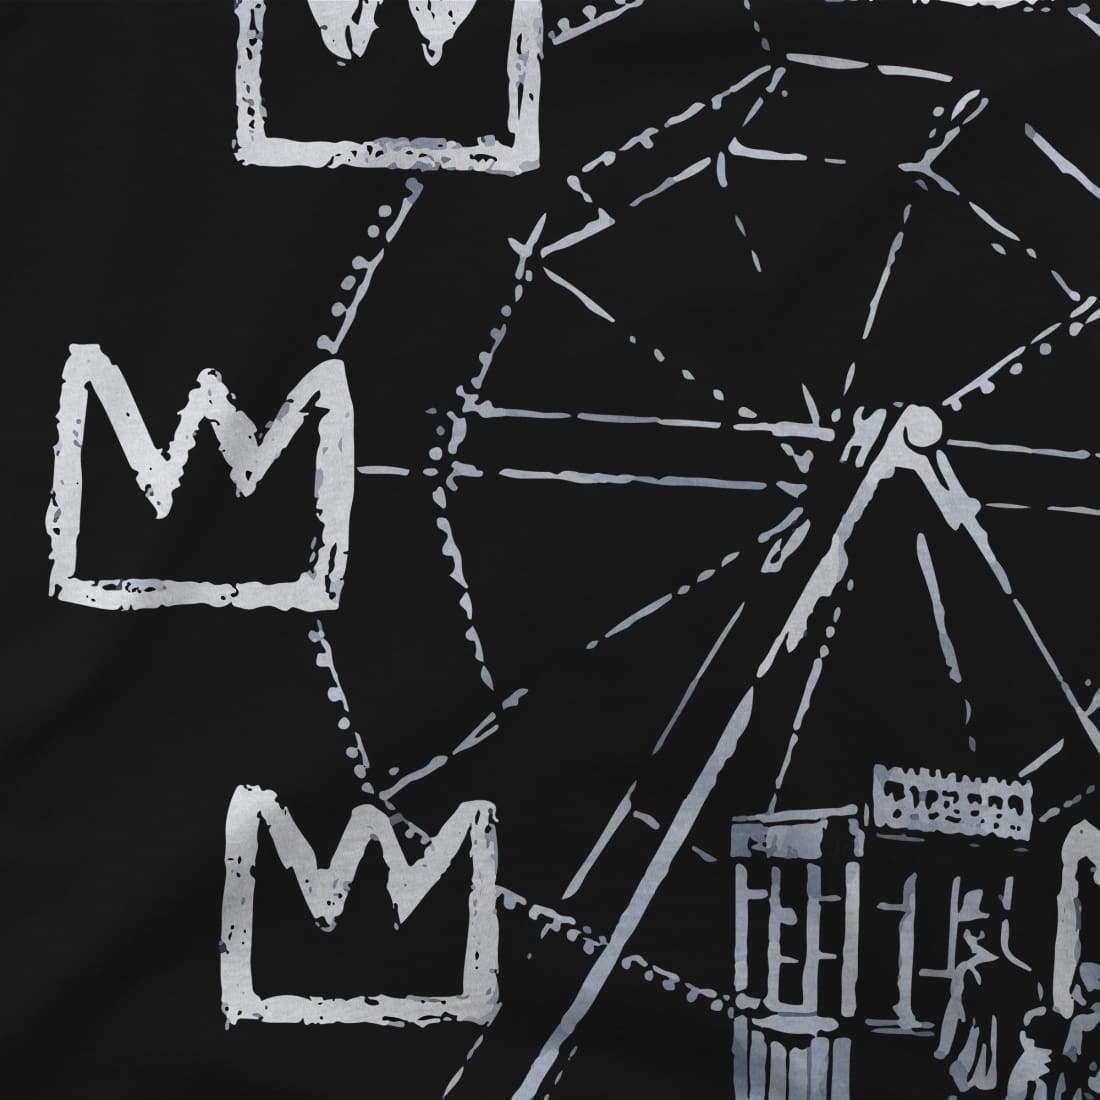 Banksy Ferris Wheel Homage to Basquiat Artwork T-Shirt